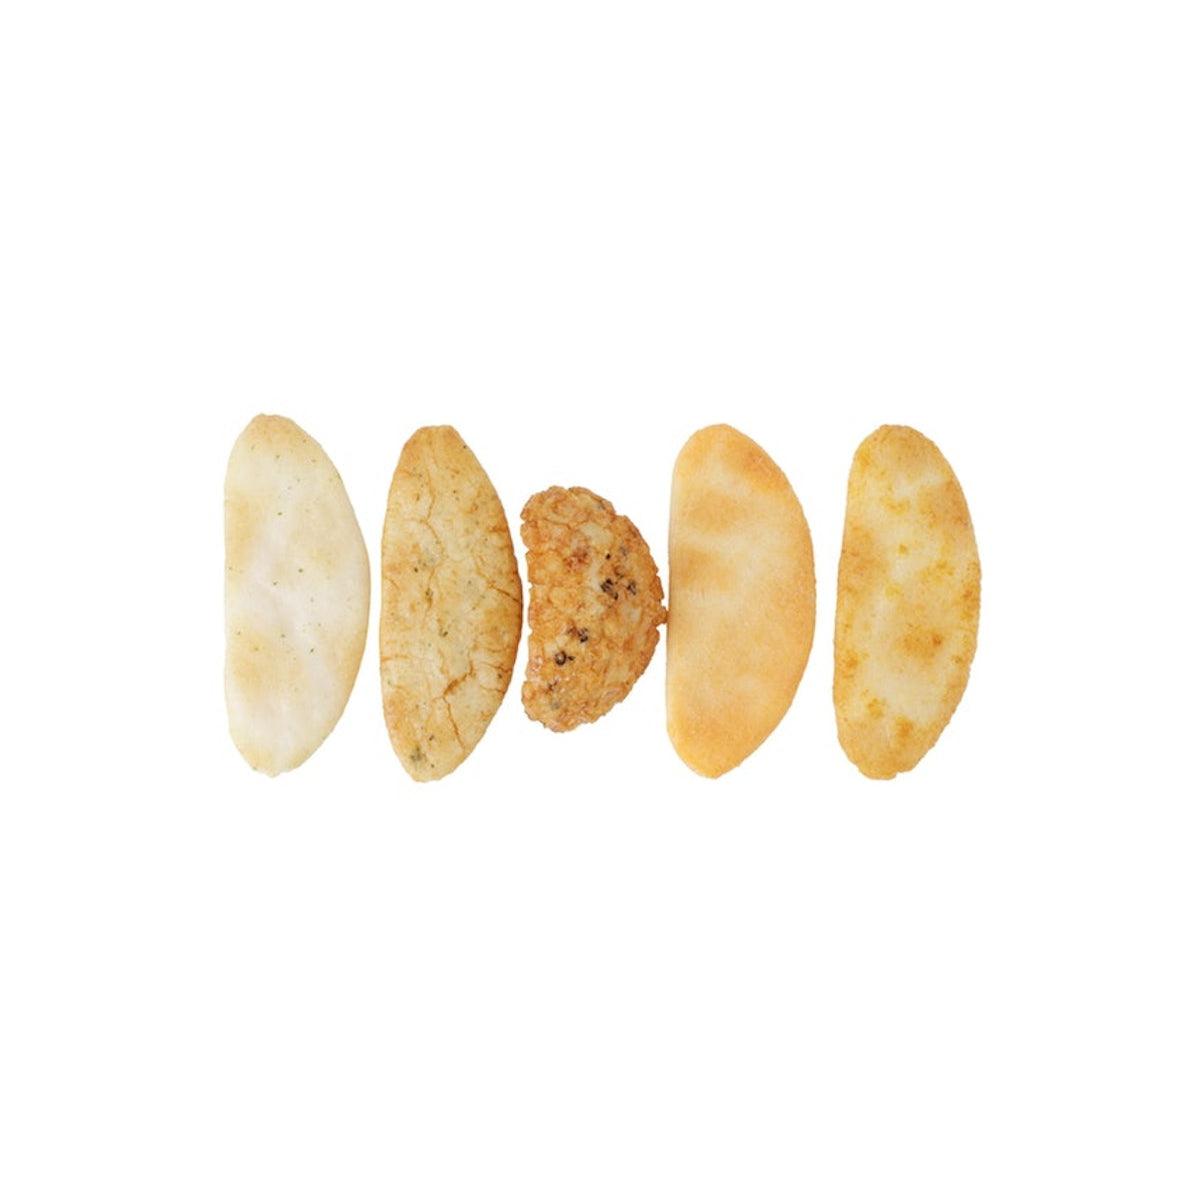 Befco Bakauke Senbei Rice Crackers 5 Flavors Assortment (Pack of 3 Bags) - YOYO JAPAN